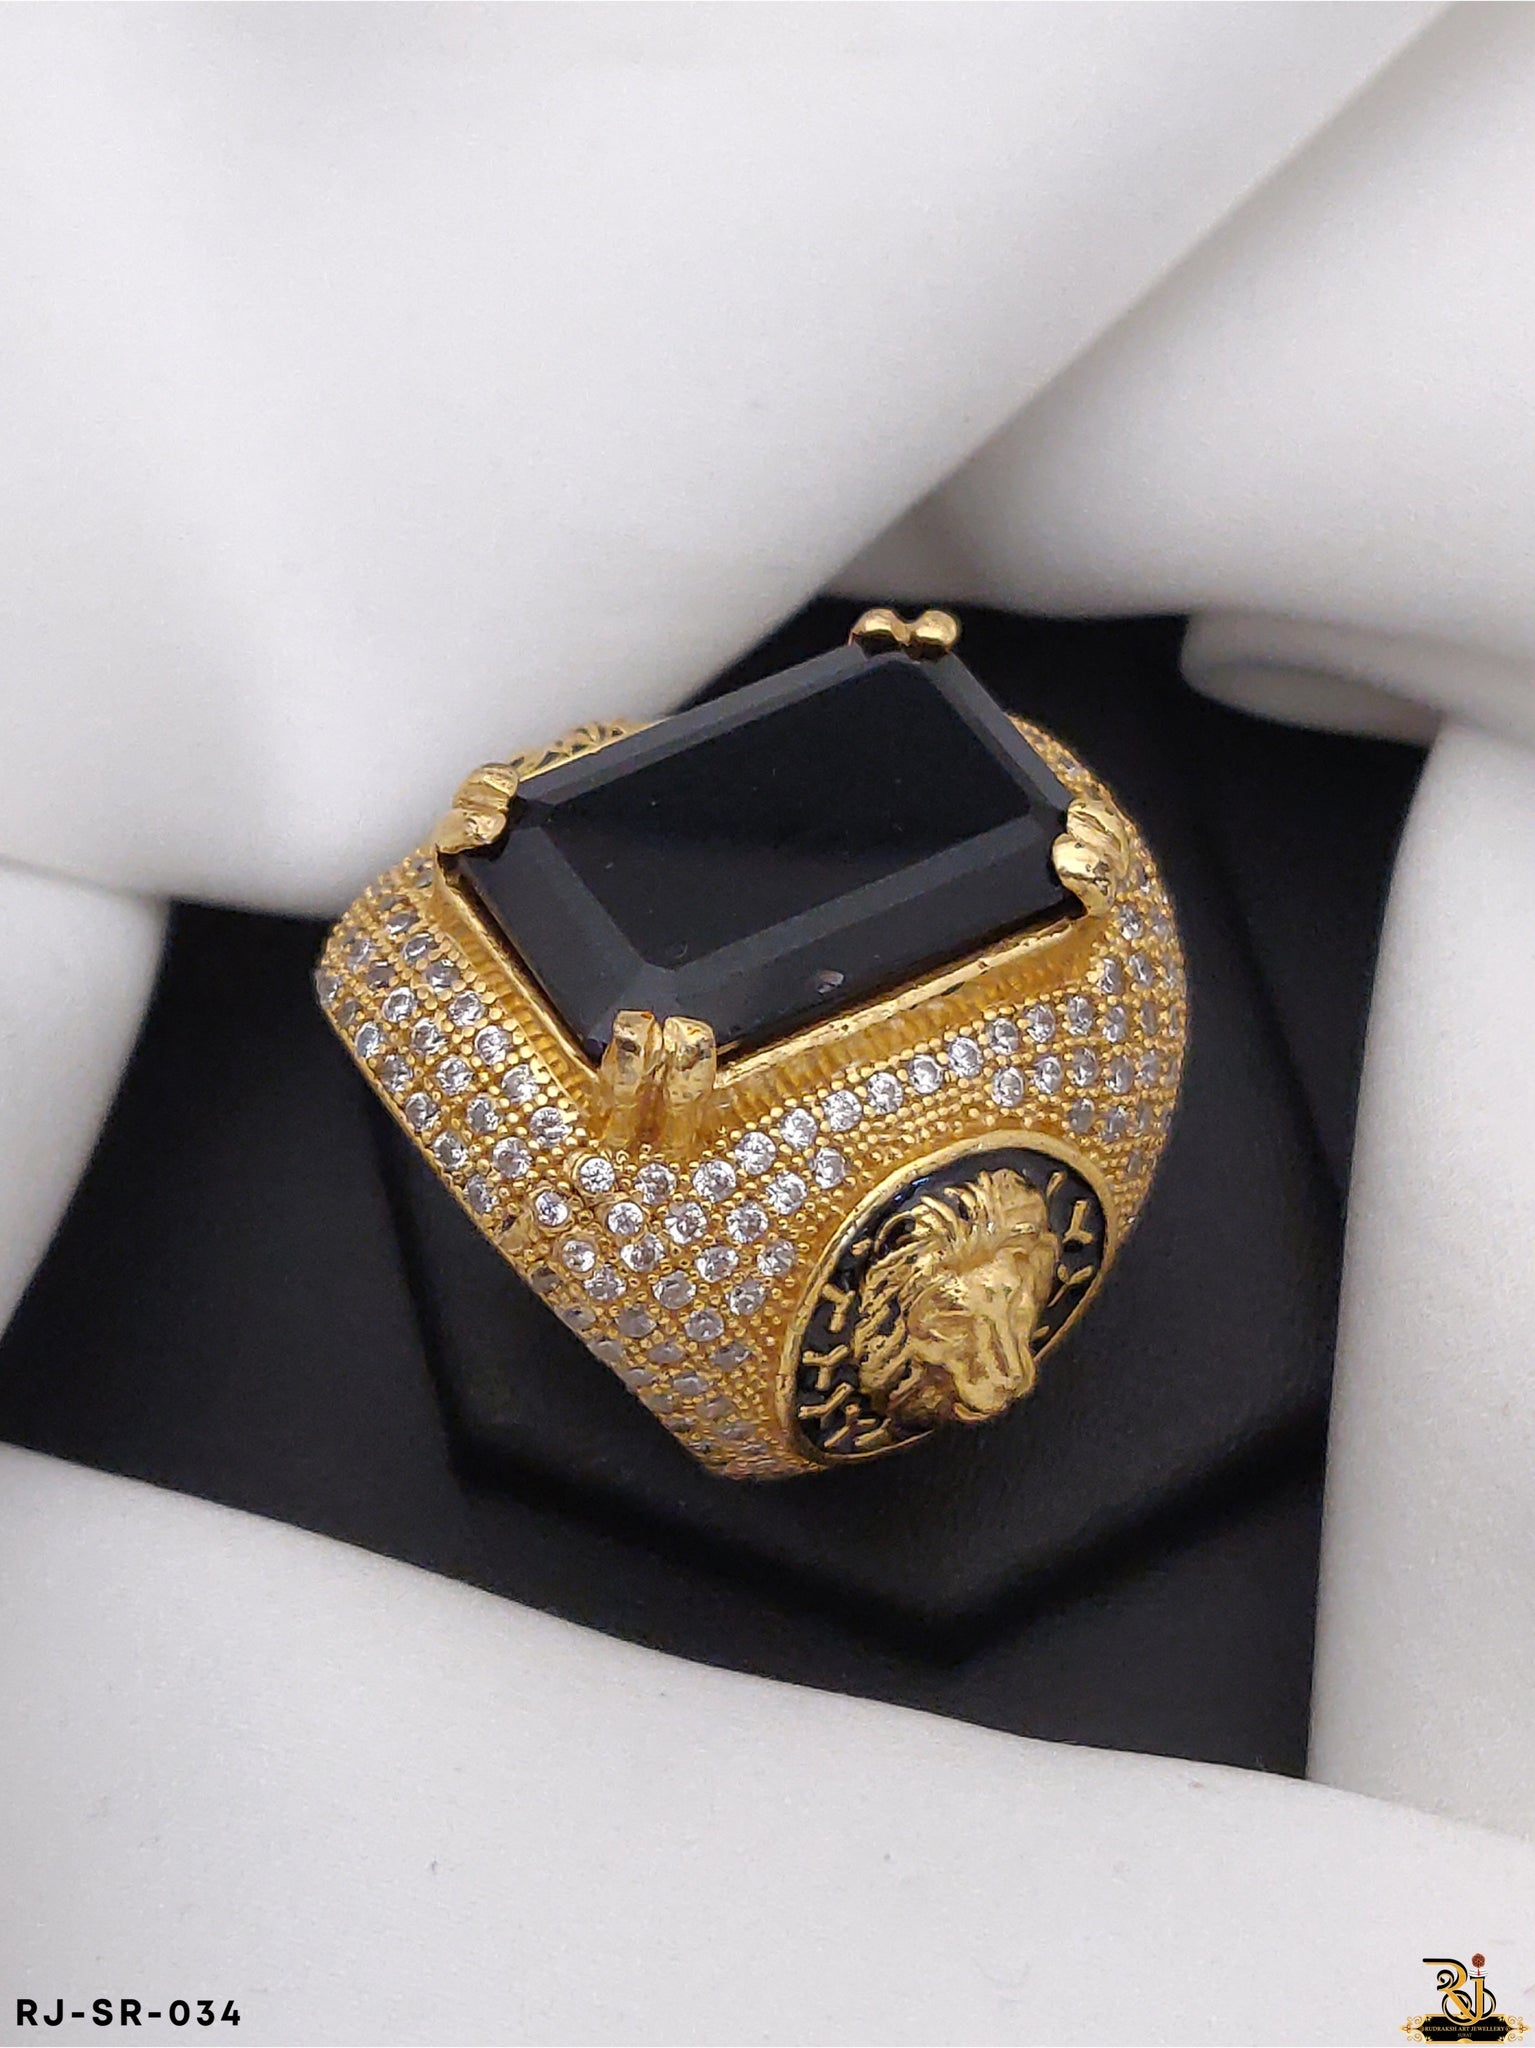 Designer Red gemstone Sterling silver gemstone ring at ₹6550 | Azilaa